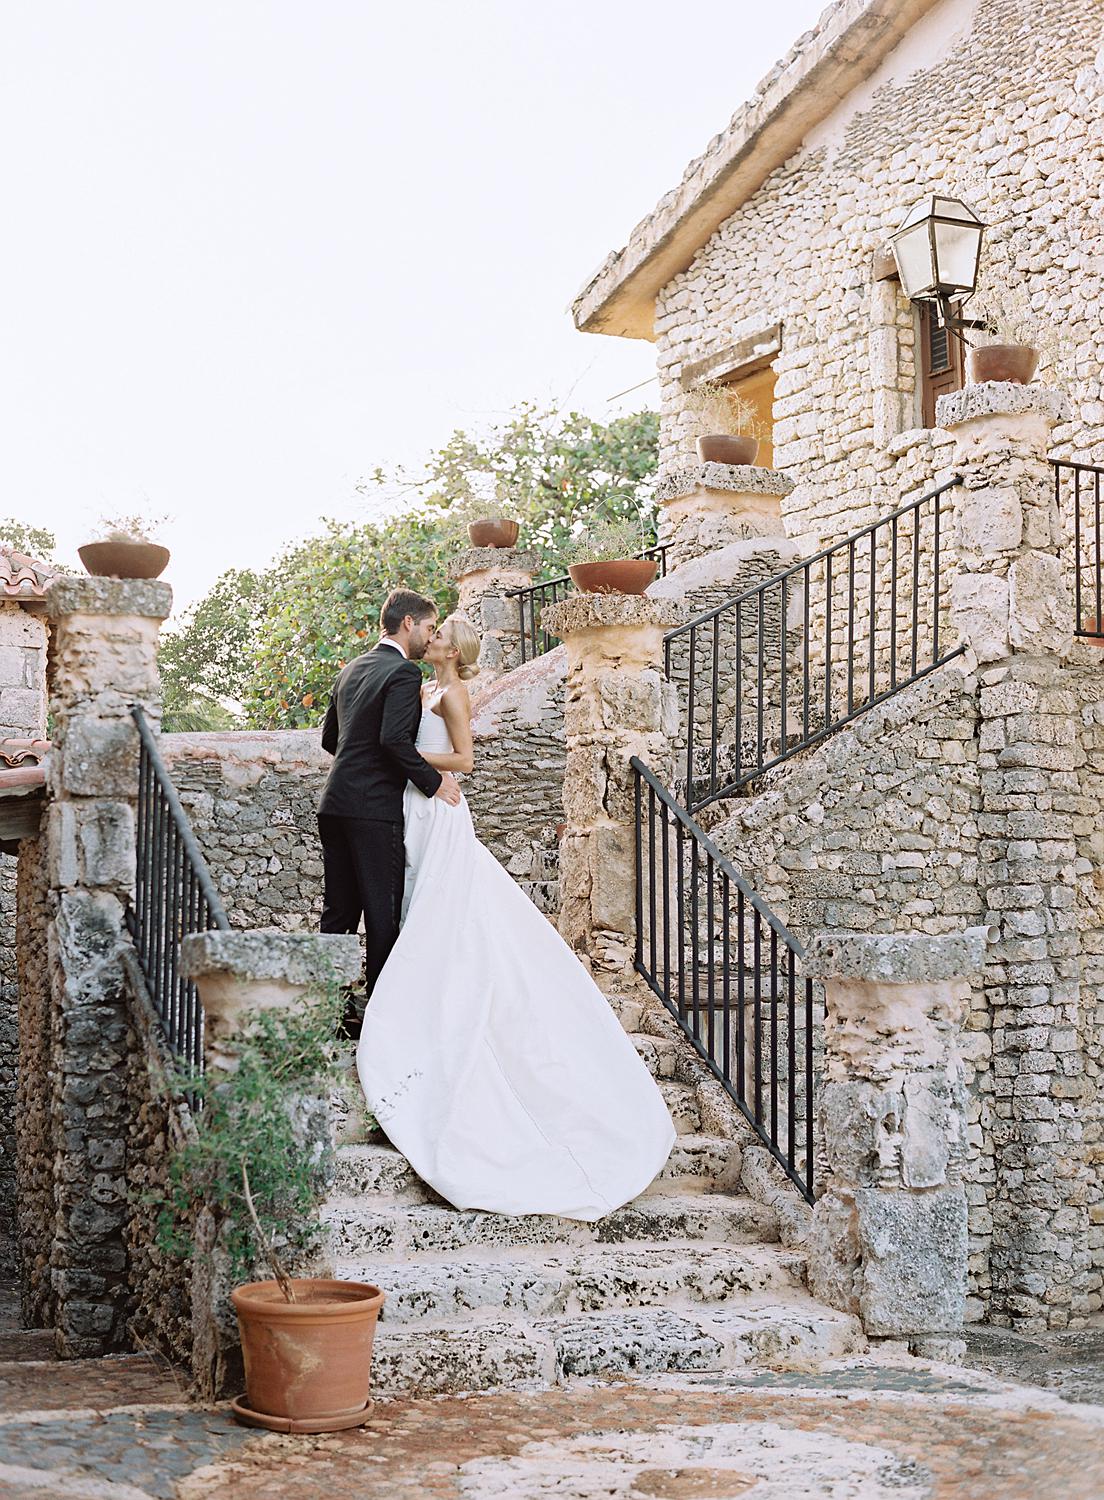 Bride and groom kiss on stone steps during their Altos de Chavón wedding.